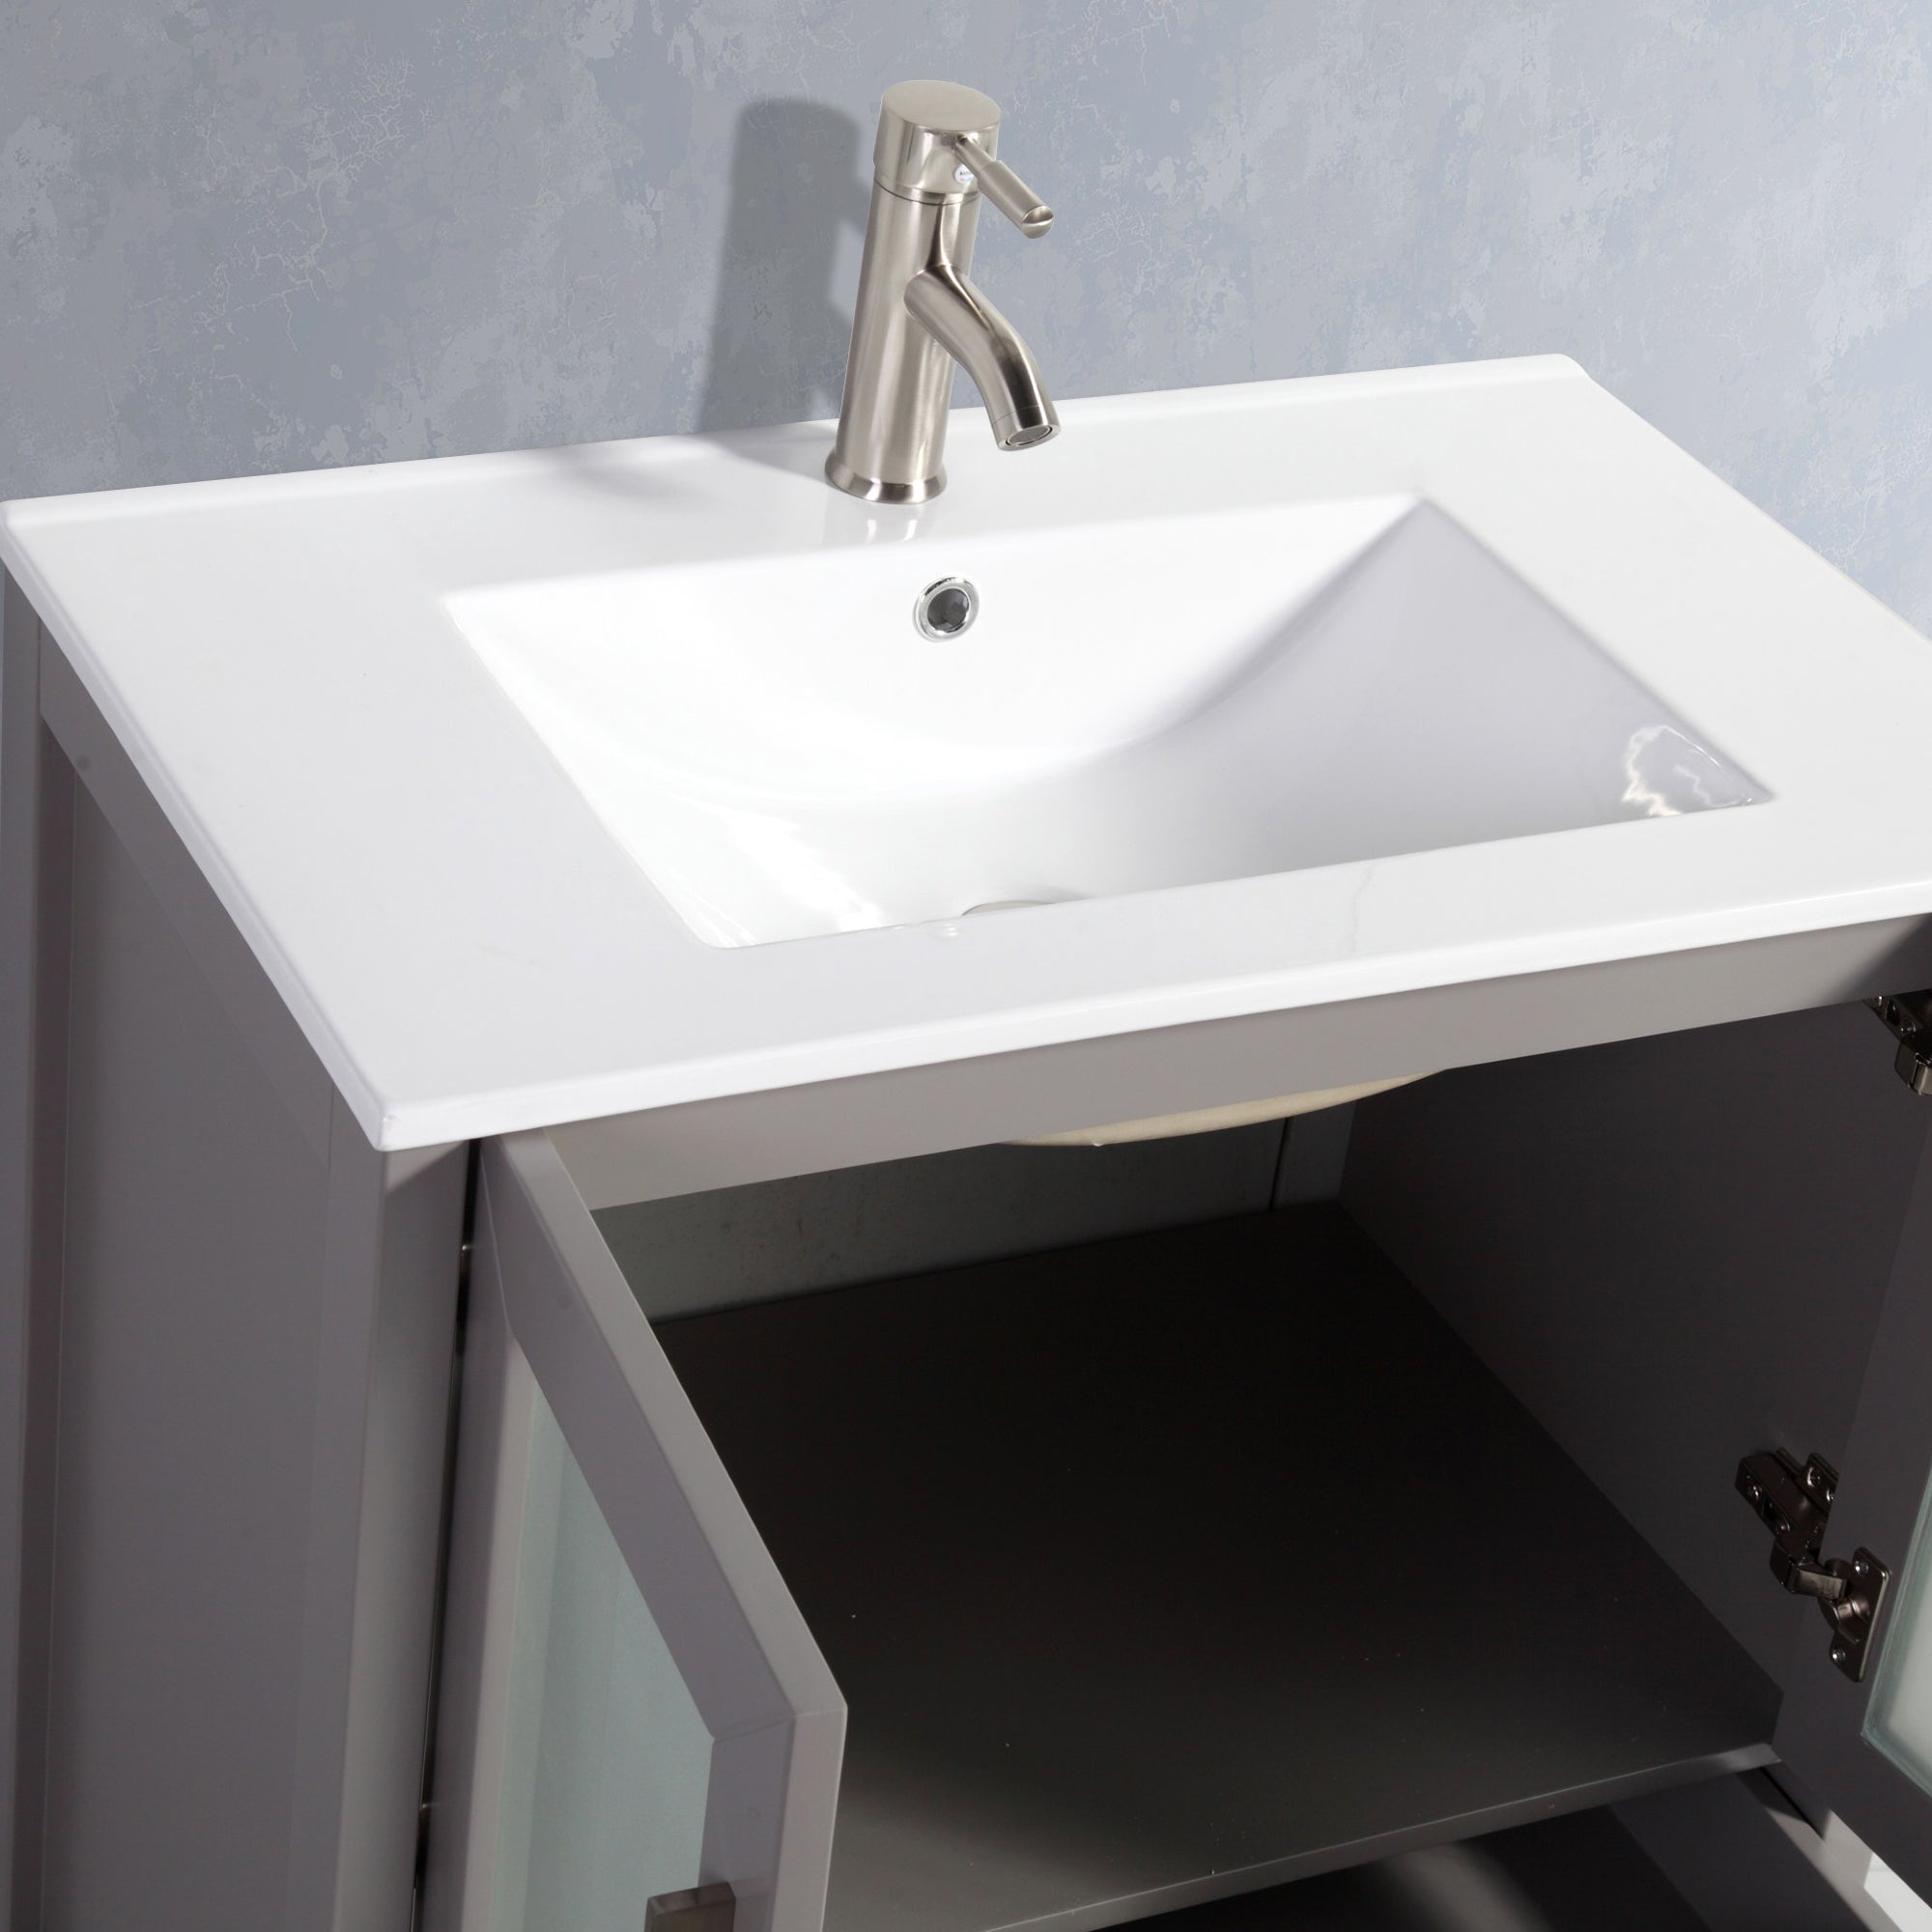 Vanity Art - Monaco 72" Double Vessel Sink Bathroom Vanity Set with Sinks and Mirrors - 1 Side Cabinet - Bhdepot 